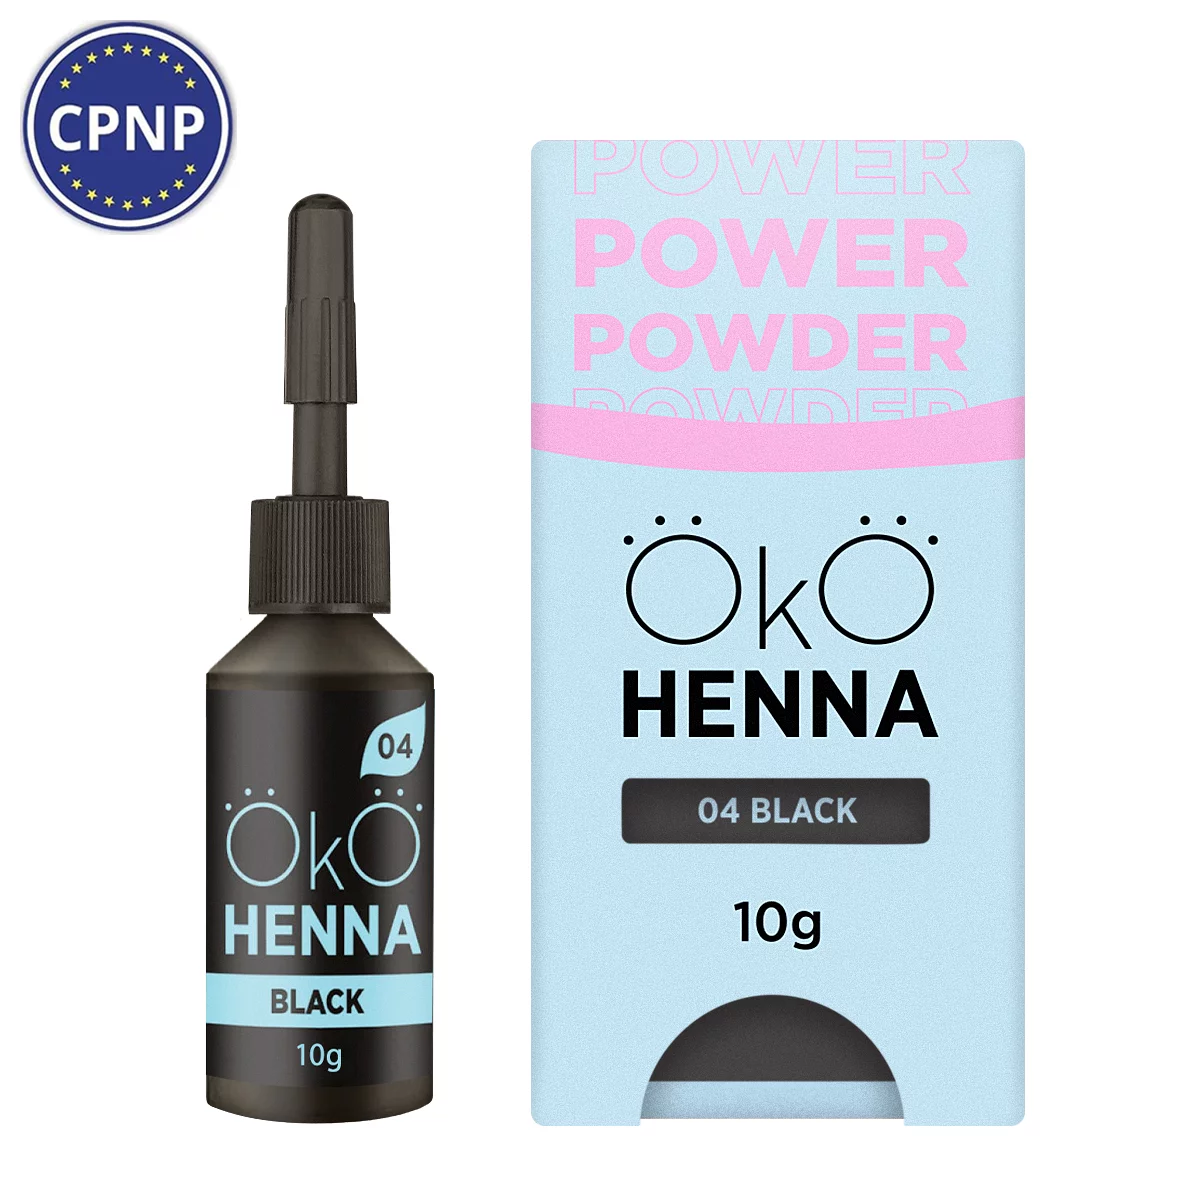 Къна за вежди OKO Power Powder, 04 Black, 10g